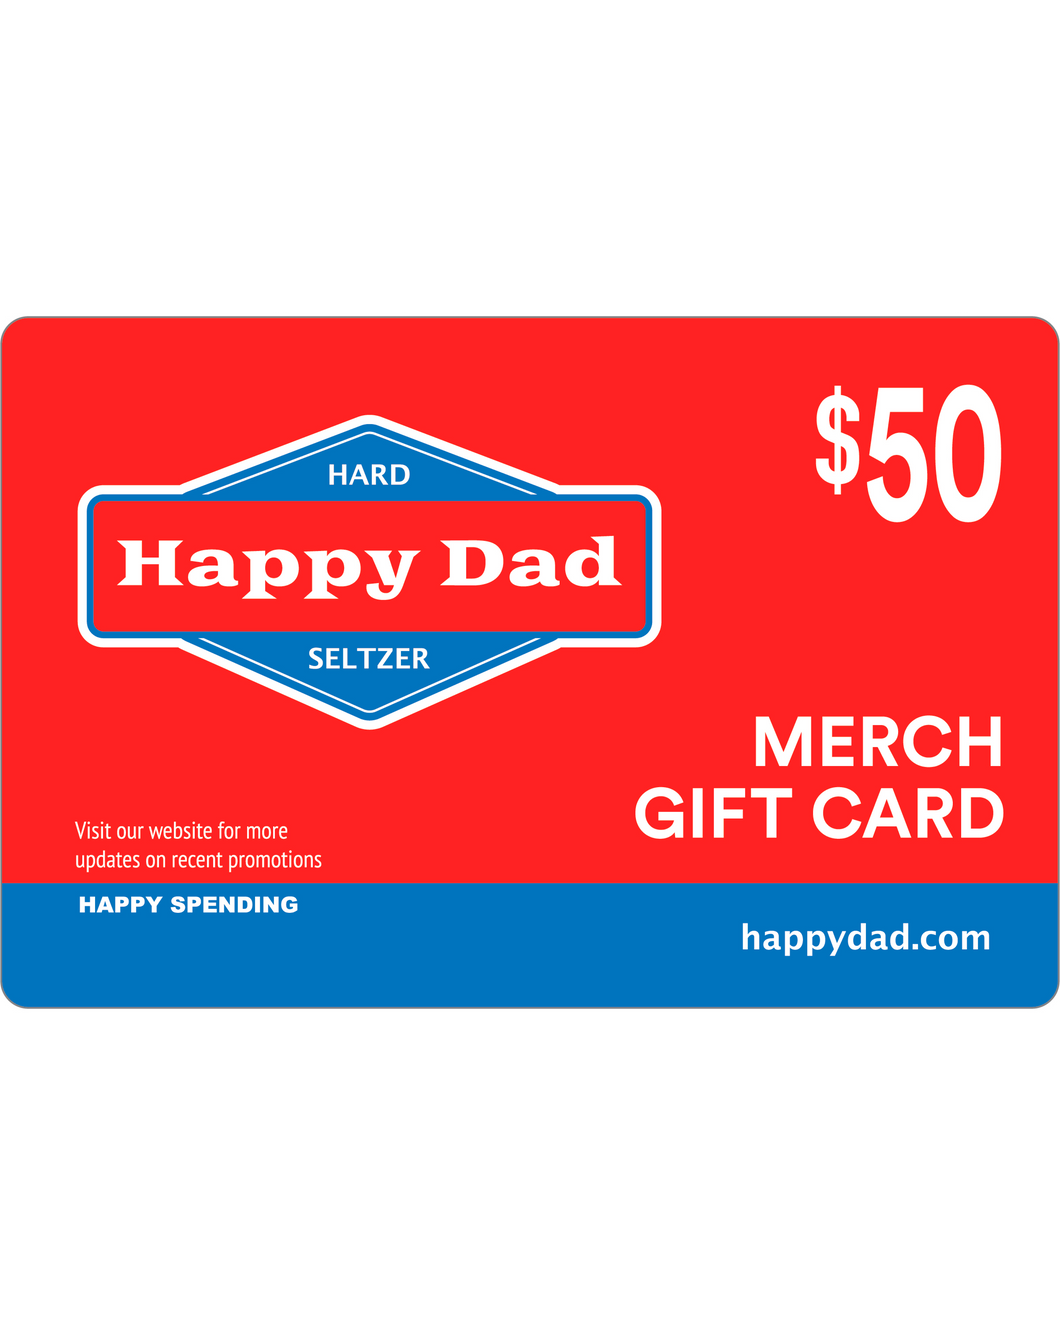 Happy Dad $50 Merch Gift Card